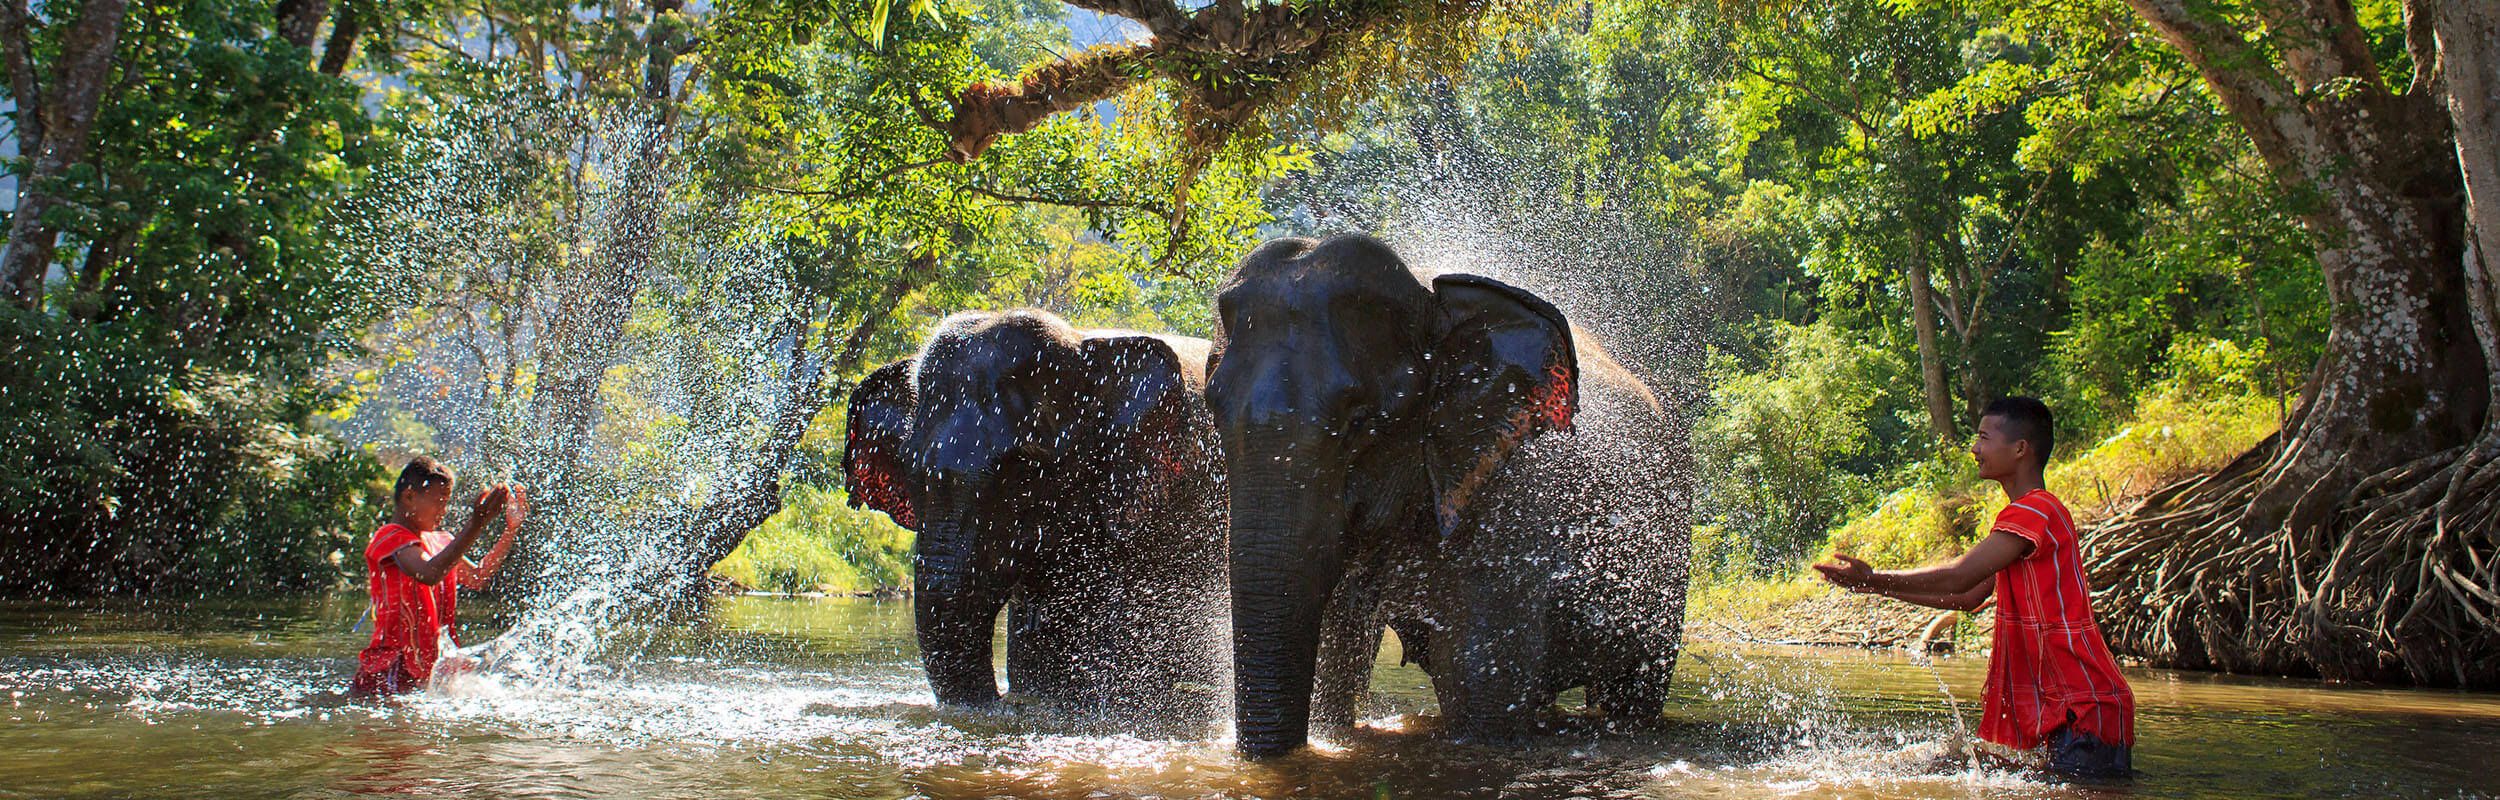 phuket elephant sanctuary park tour